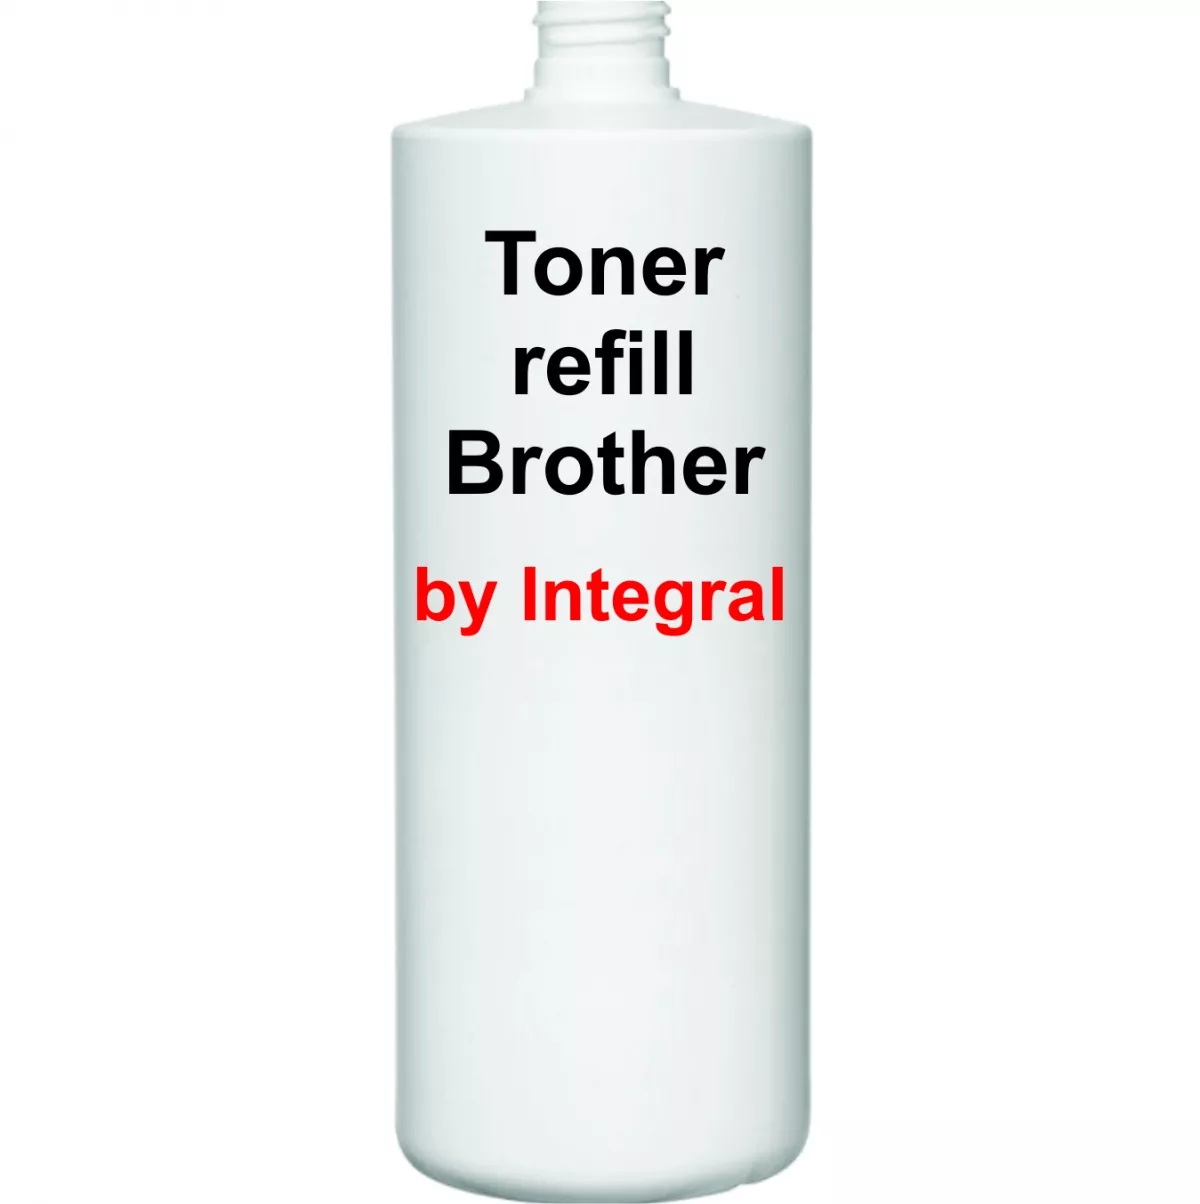 Toner refill Brother TN2010 TN2210 TN2220 1000g by Integral , [],erefill.ro